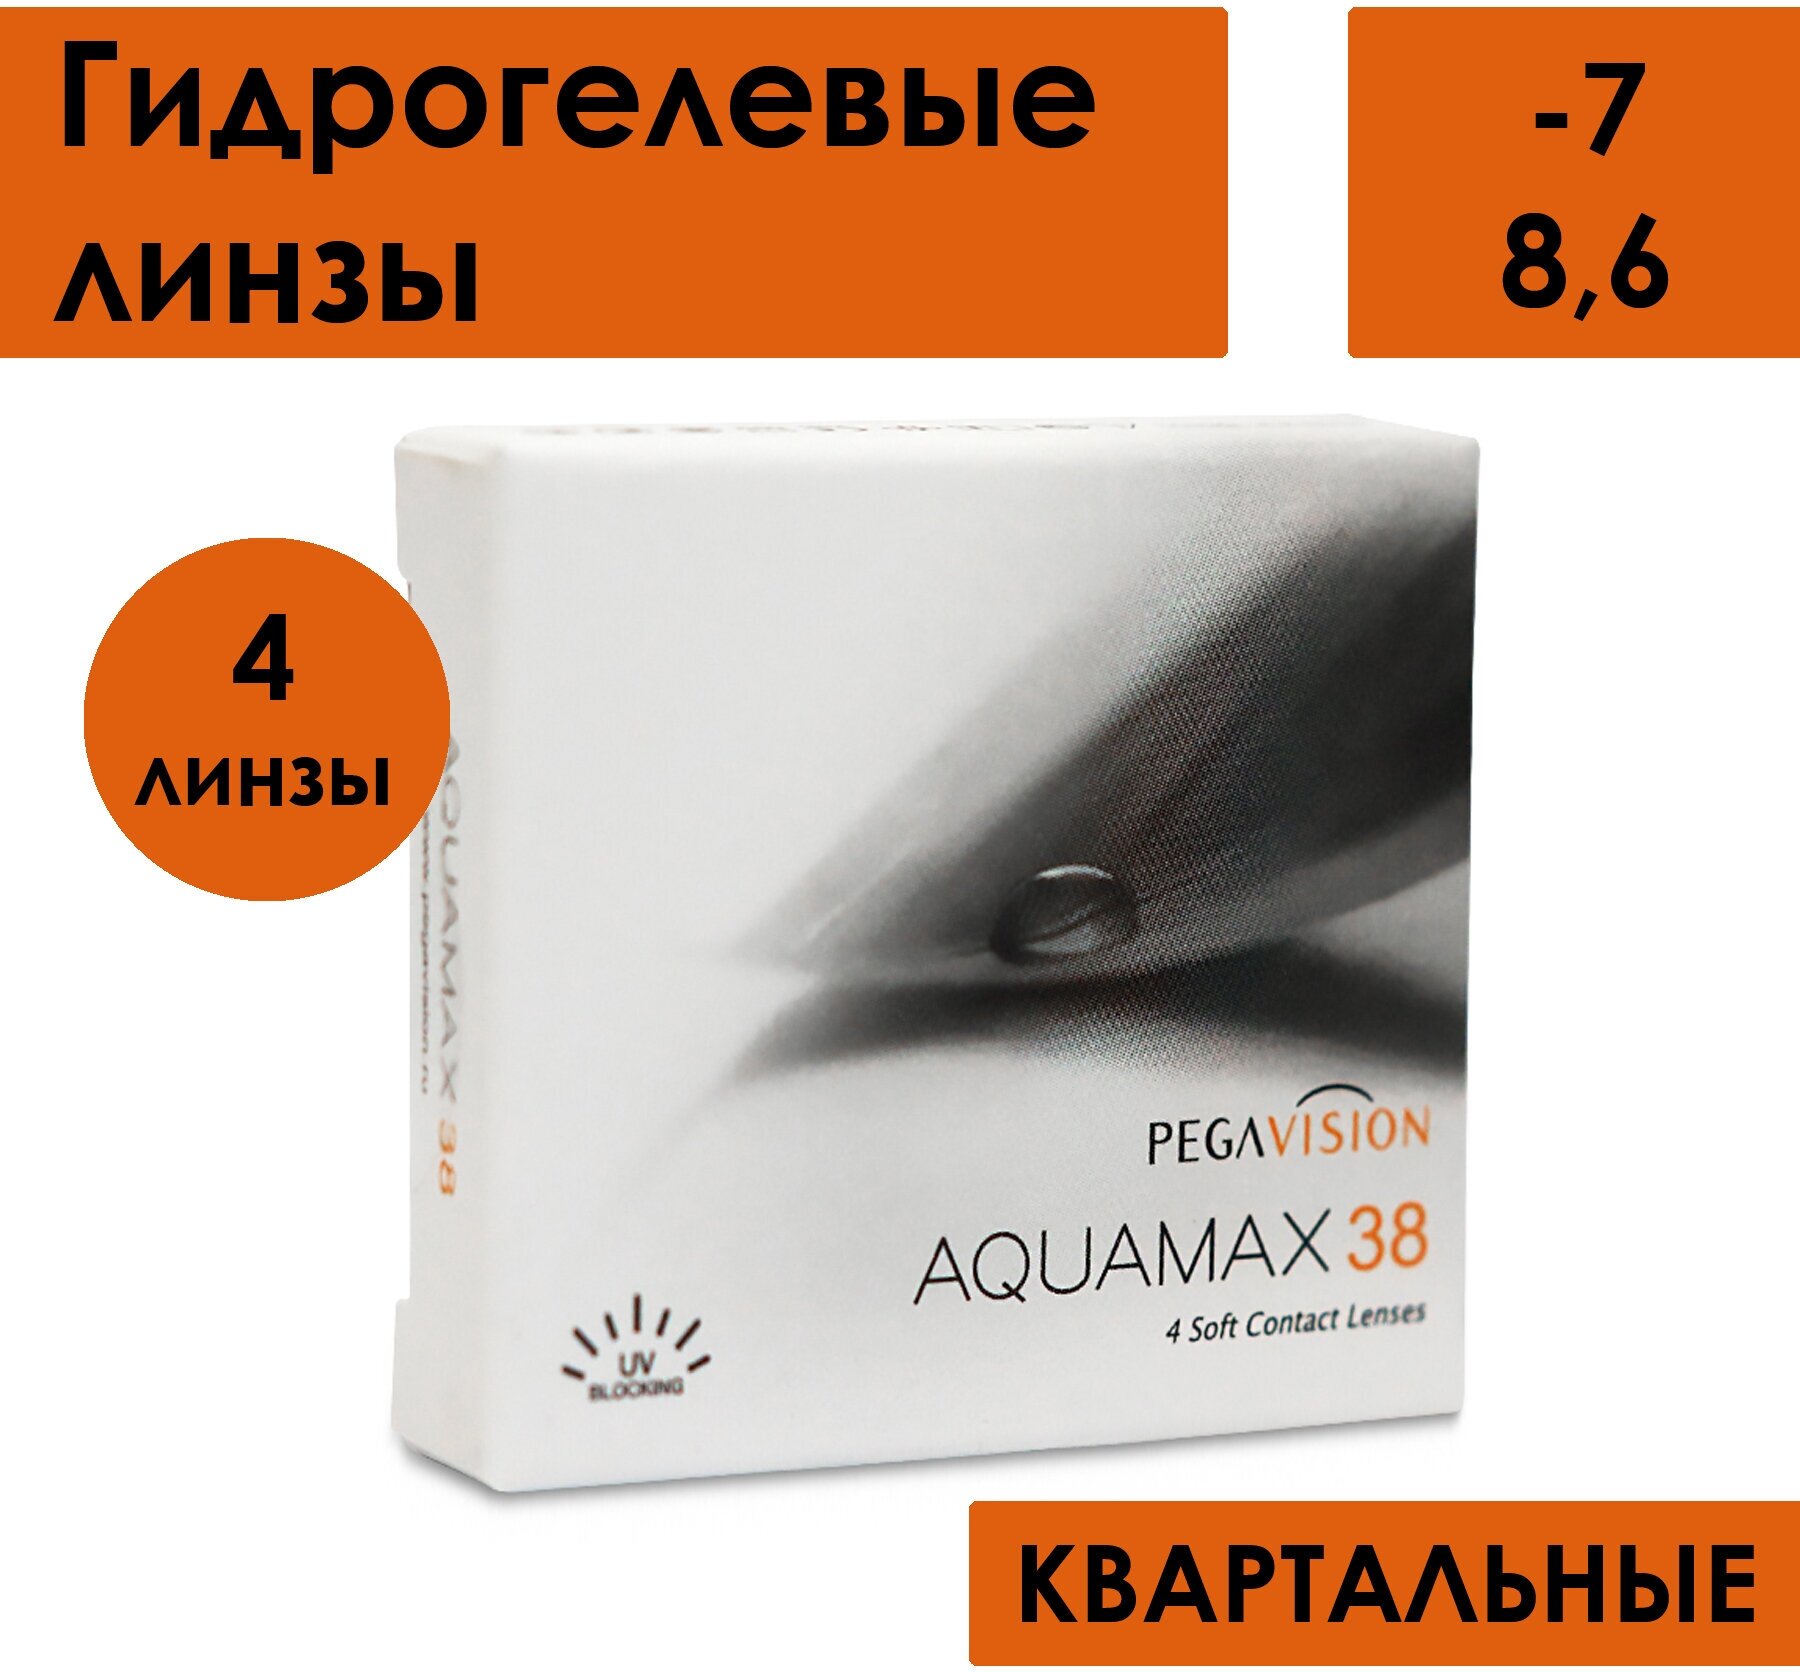 Контактные линзы Pegavision Aquamax 38, 4 шт., R 8,6, D -7,0